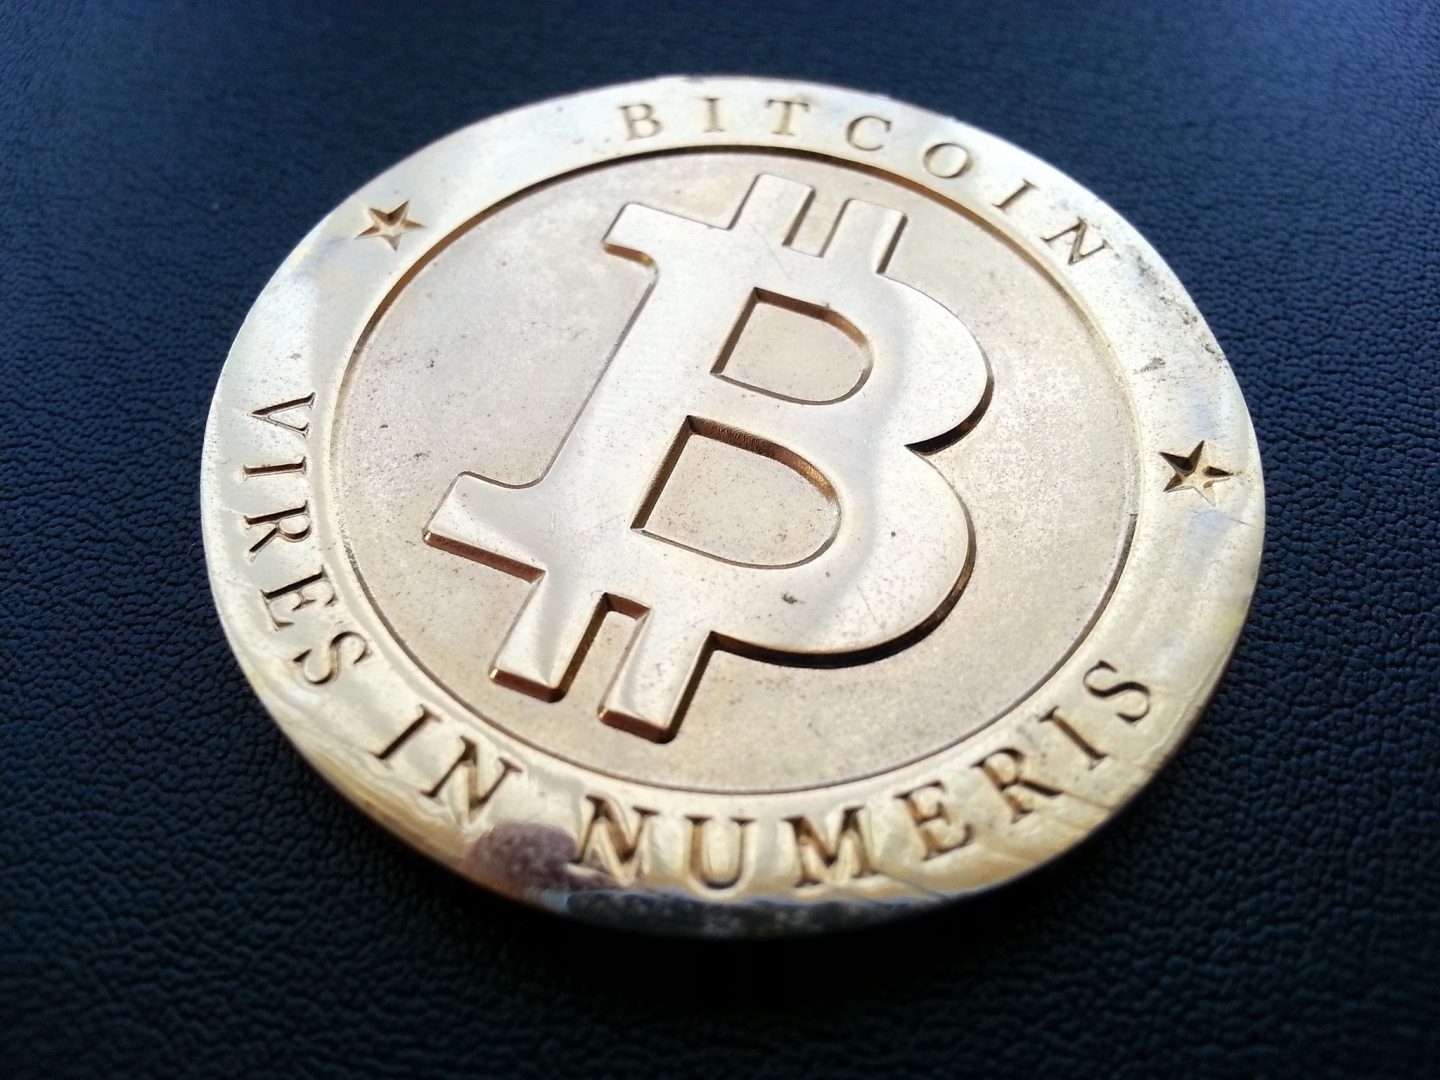 Representación física de la moneda virtual Bitcoin.